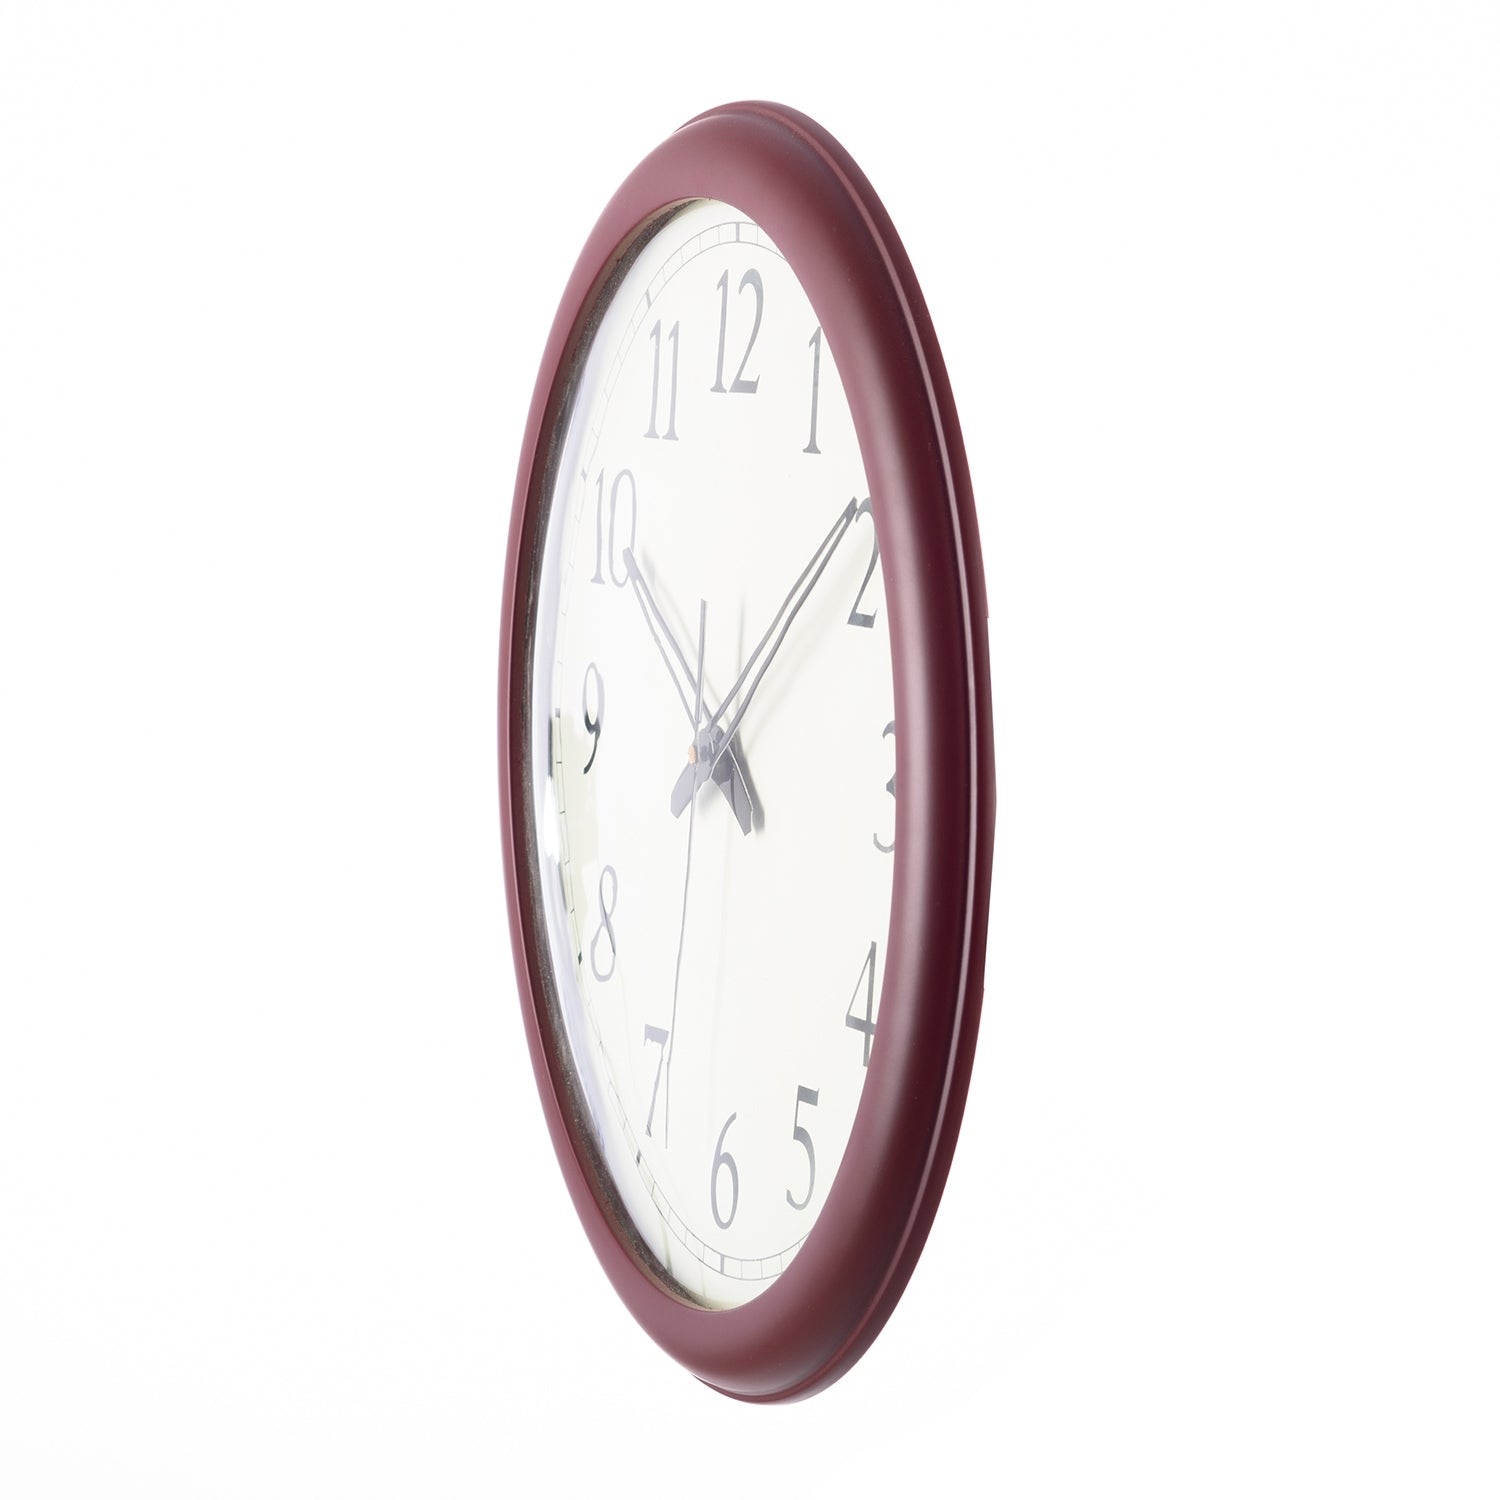 Premium Decorative Analog Brown Round Wooden Wall Clock 2